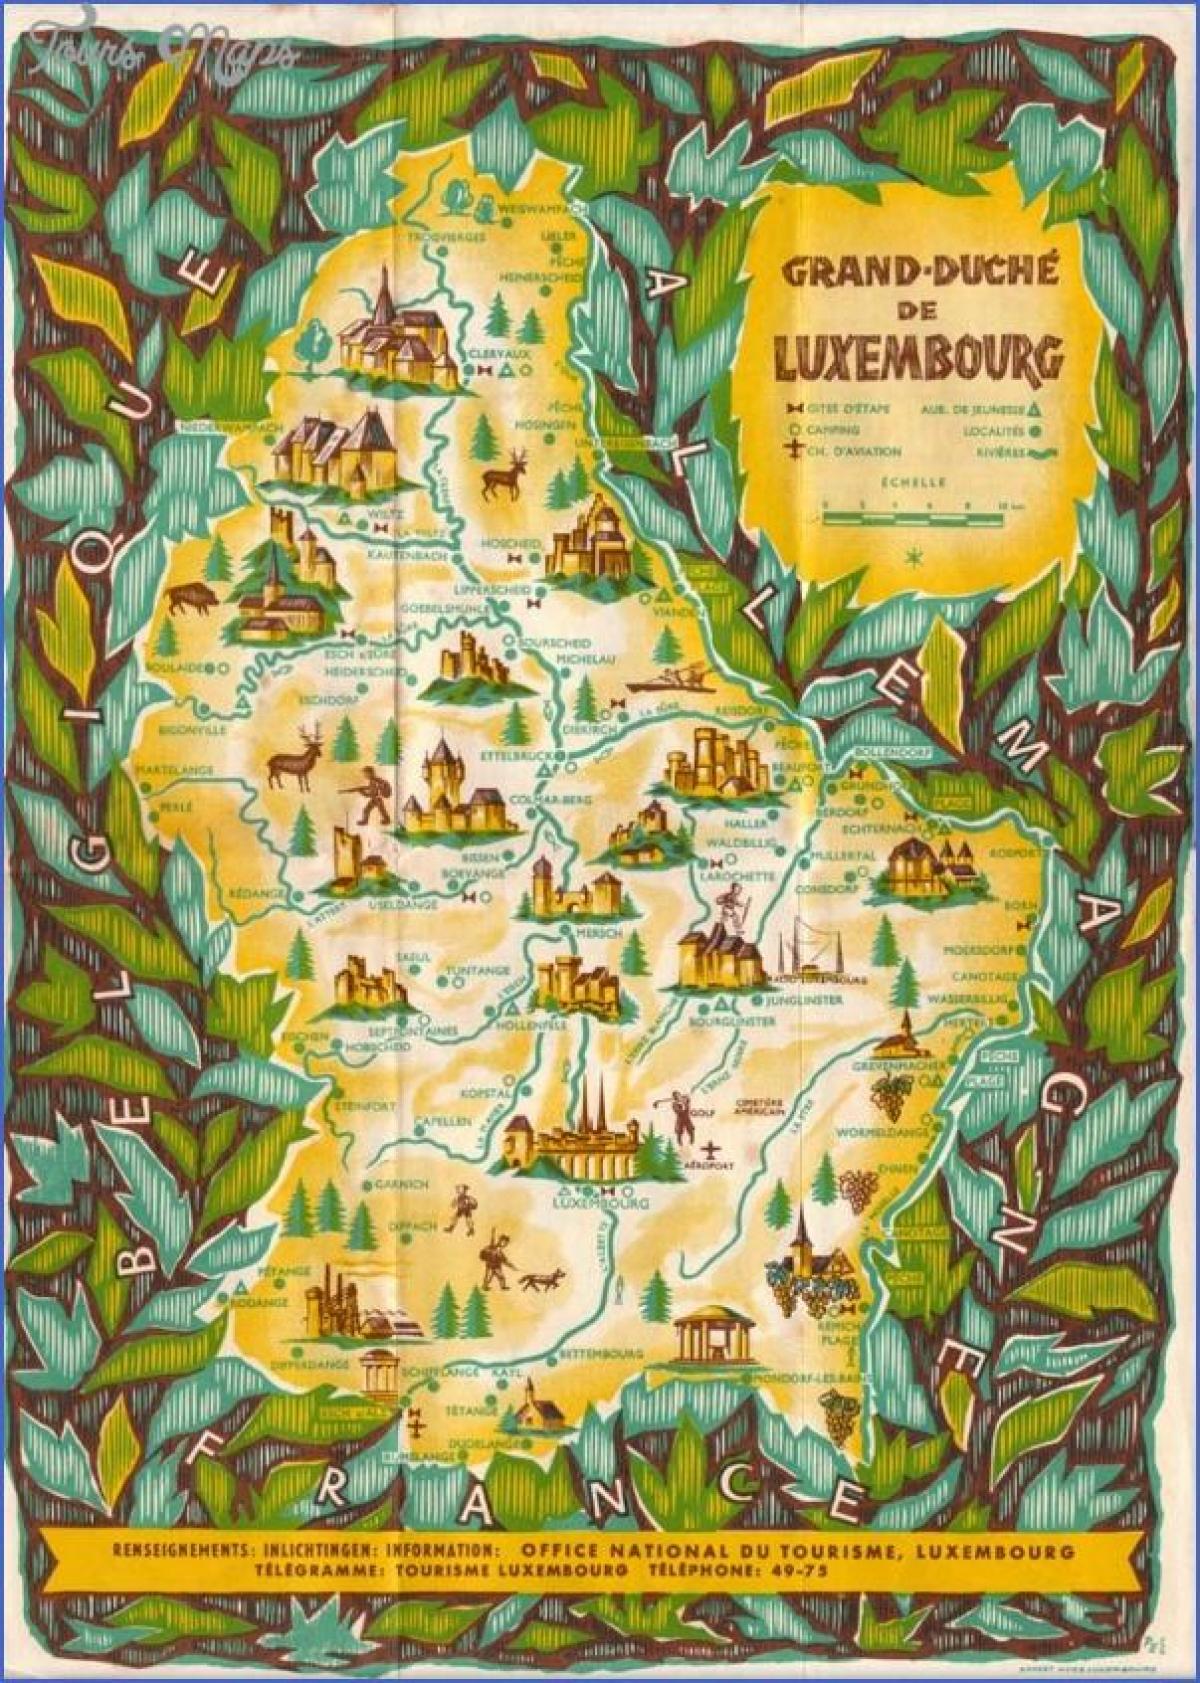 kort over Luxembourg sightseeing